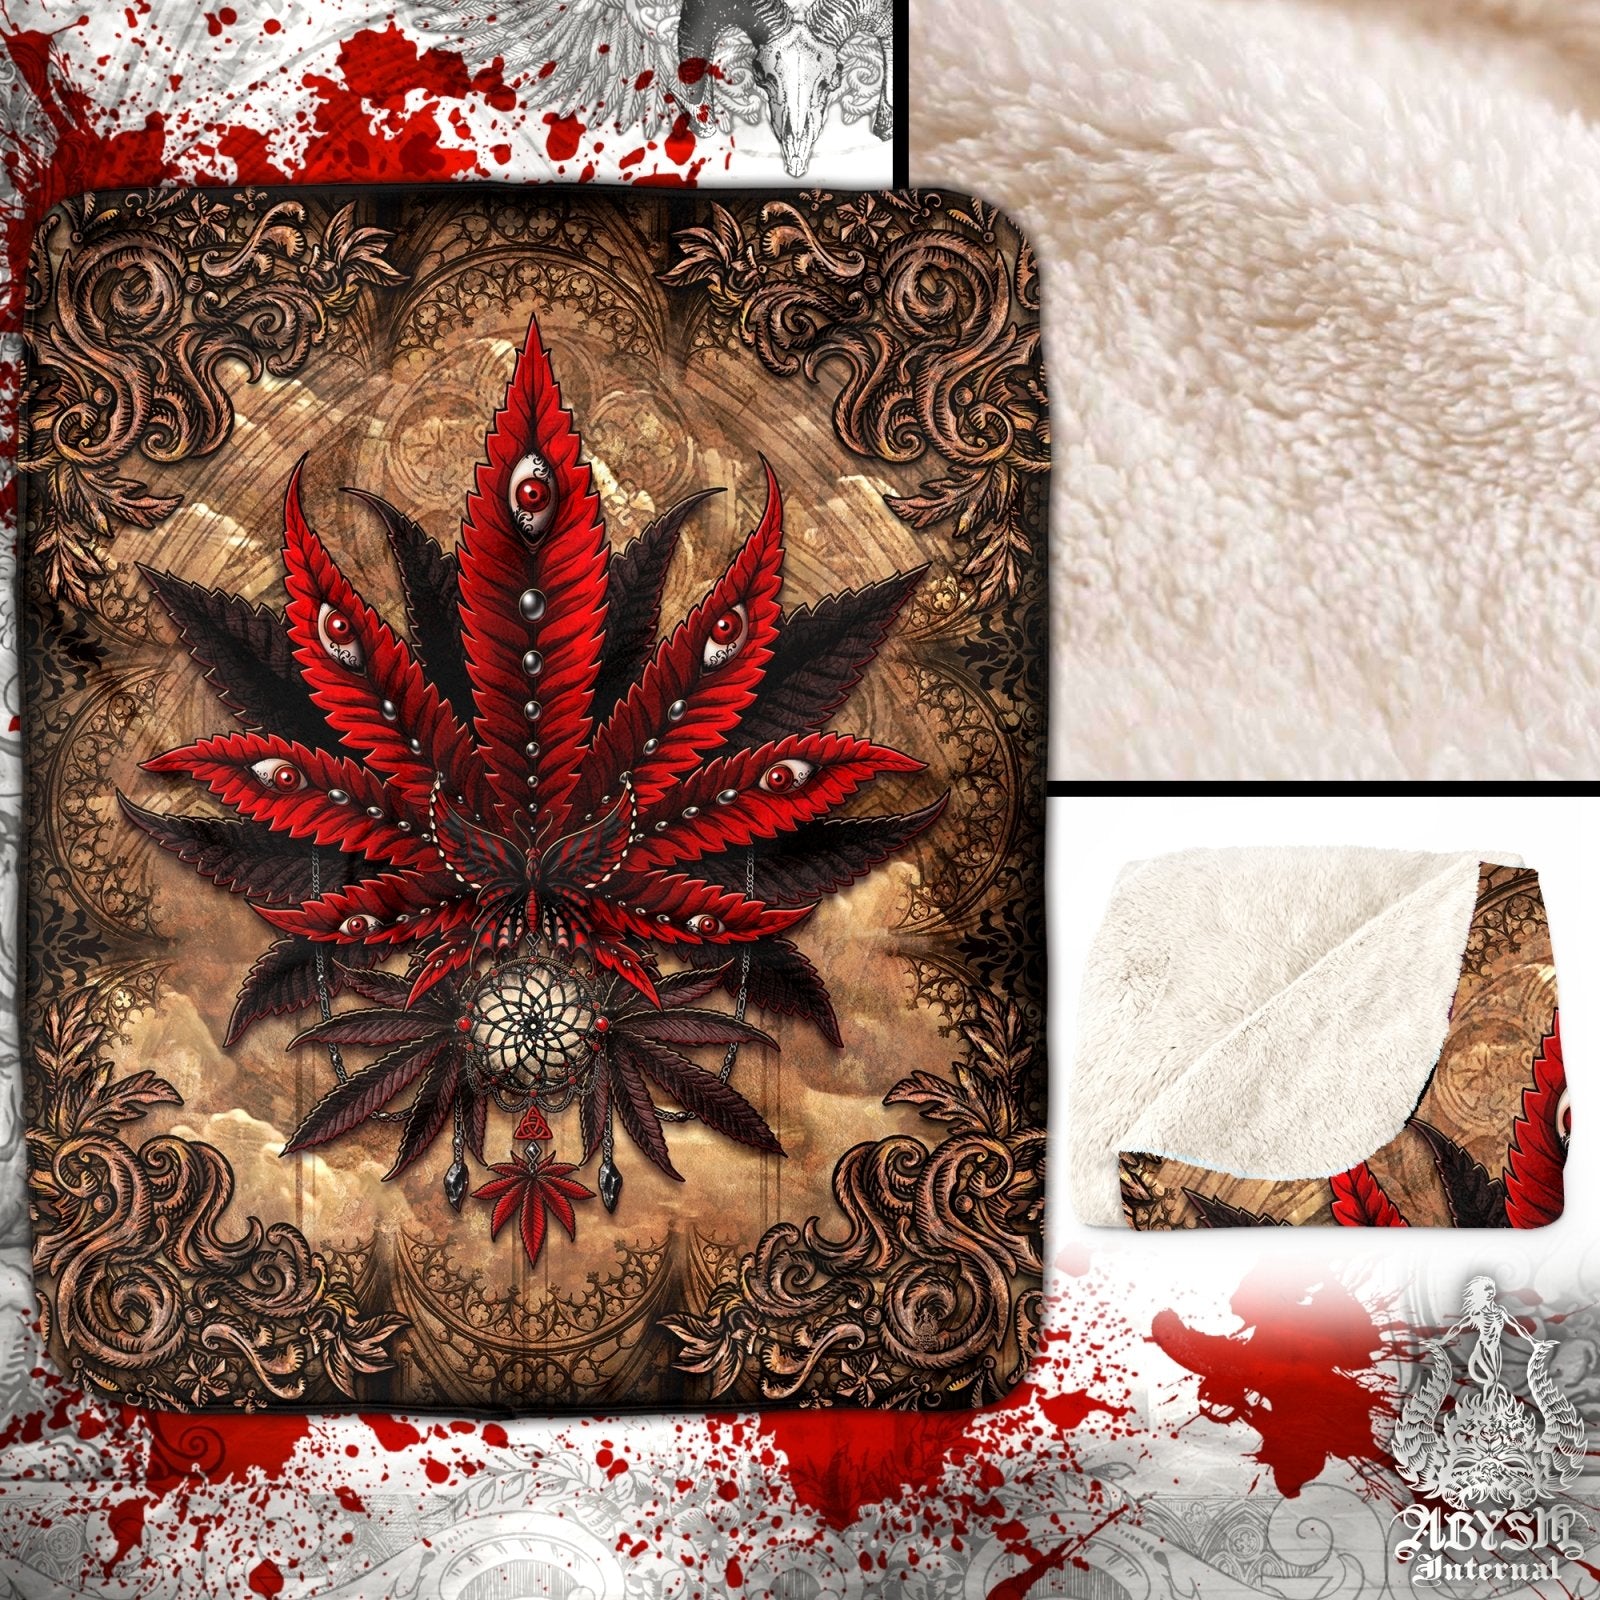 Gothic Weed Throw Fleece Blanket, Cannabis Art, Goth Home Decor, 420 Gift - Marijuana, Horror Beige - Abysm Internal